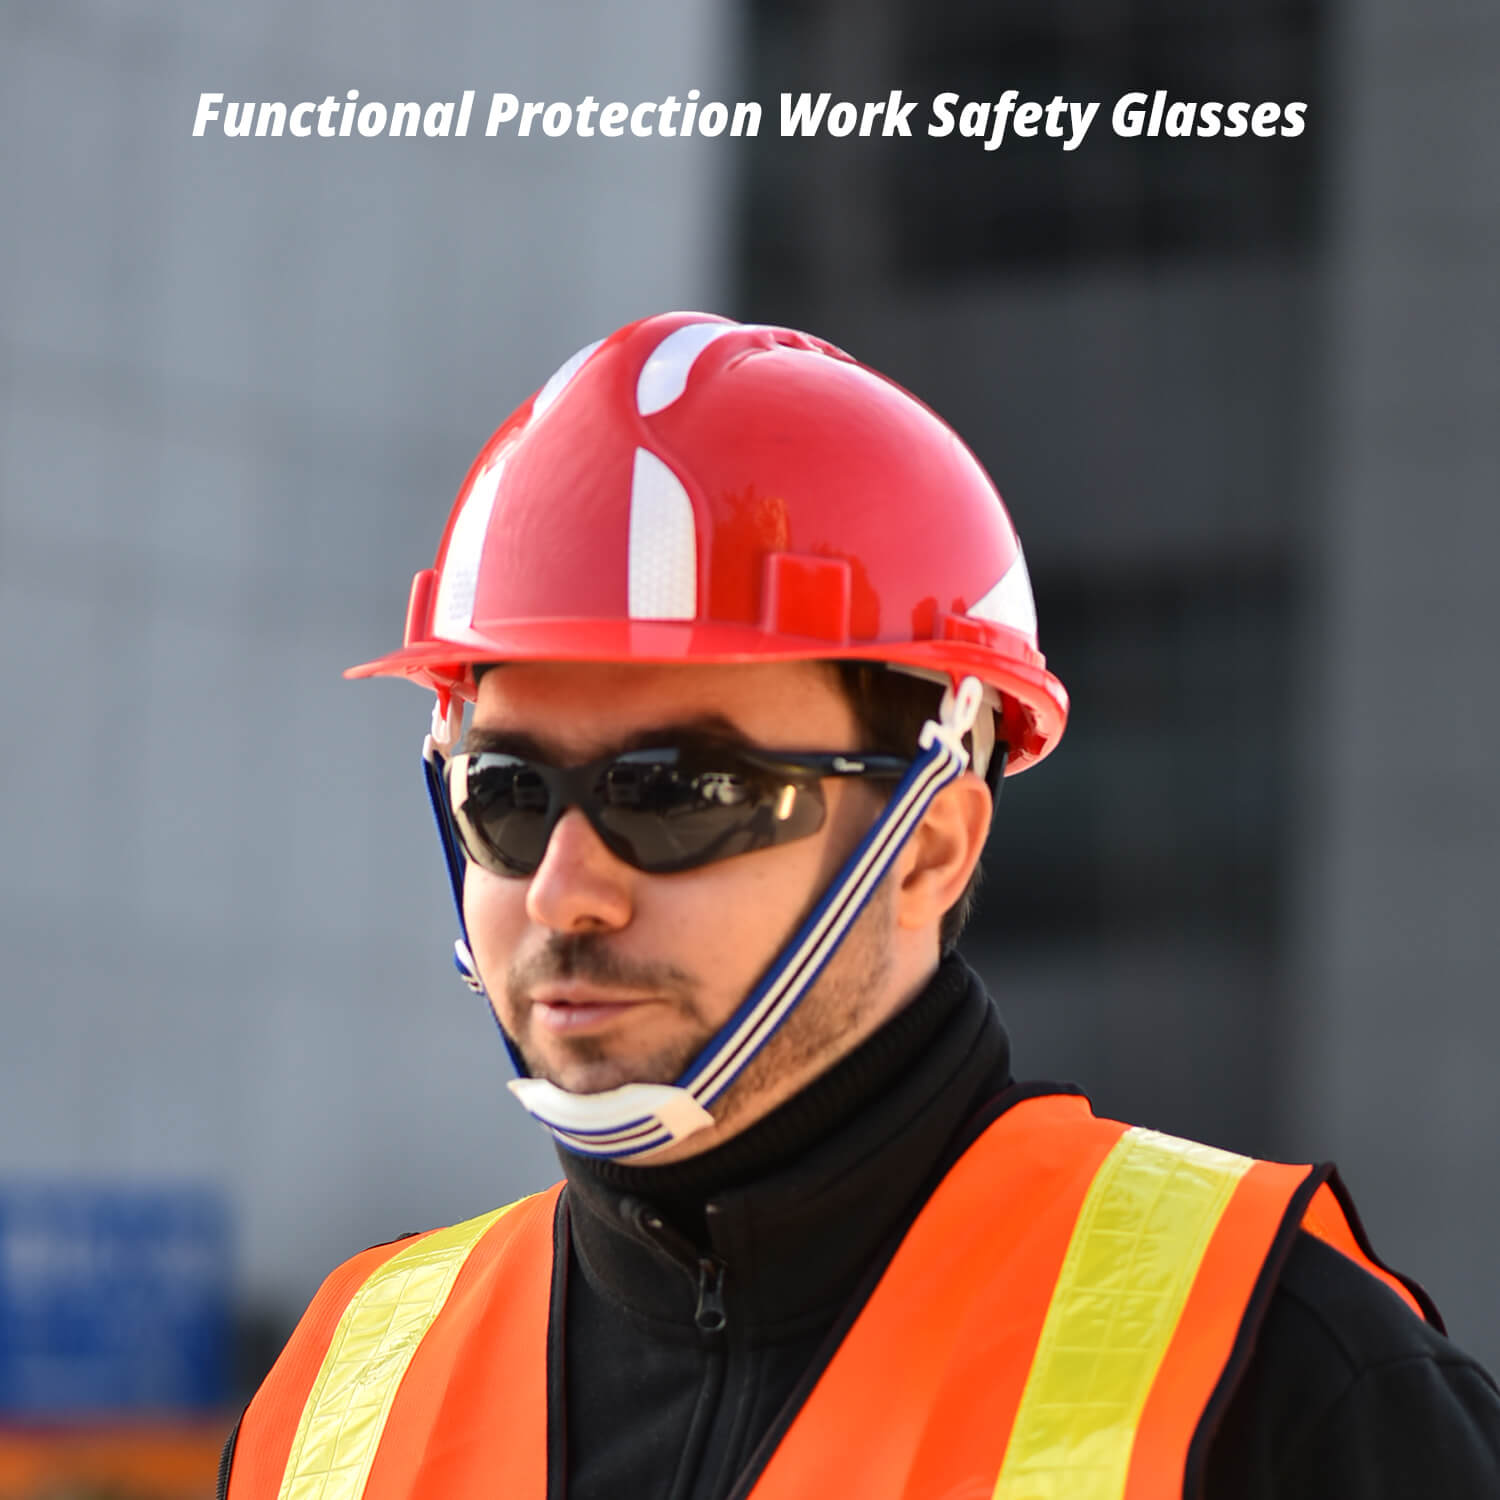 Safeyear Anti-UV Tinted Black Dark Safety Glasses for Men & Women